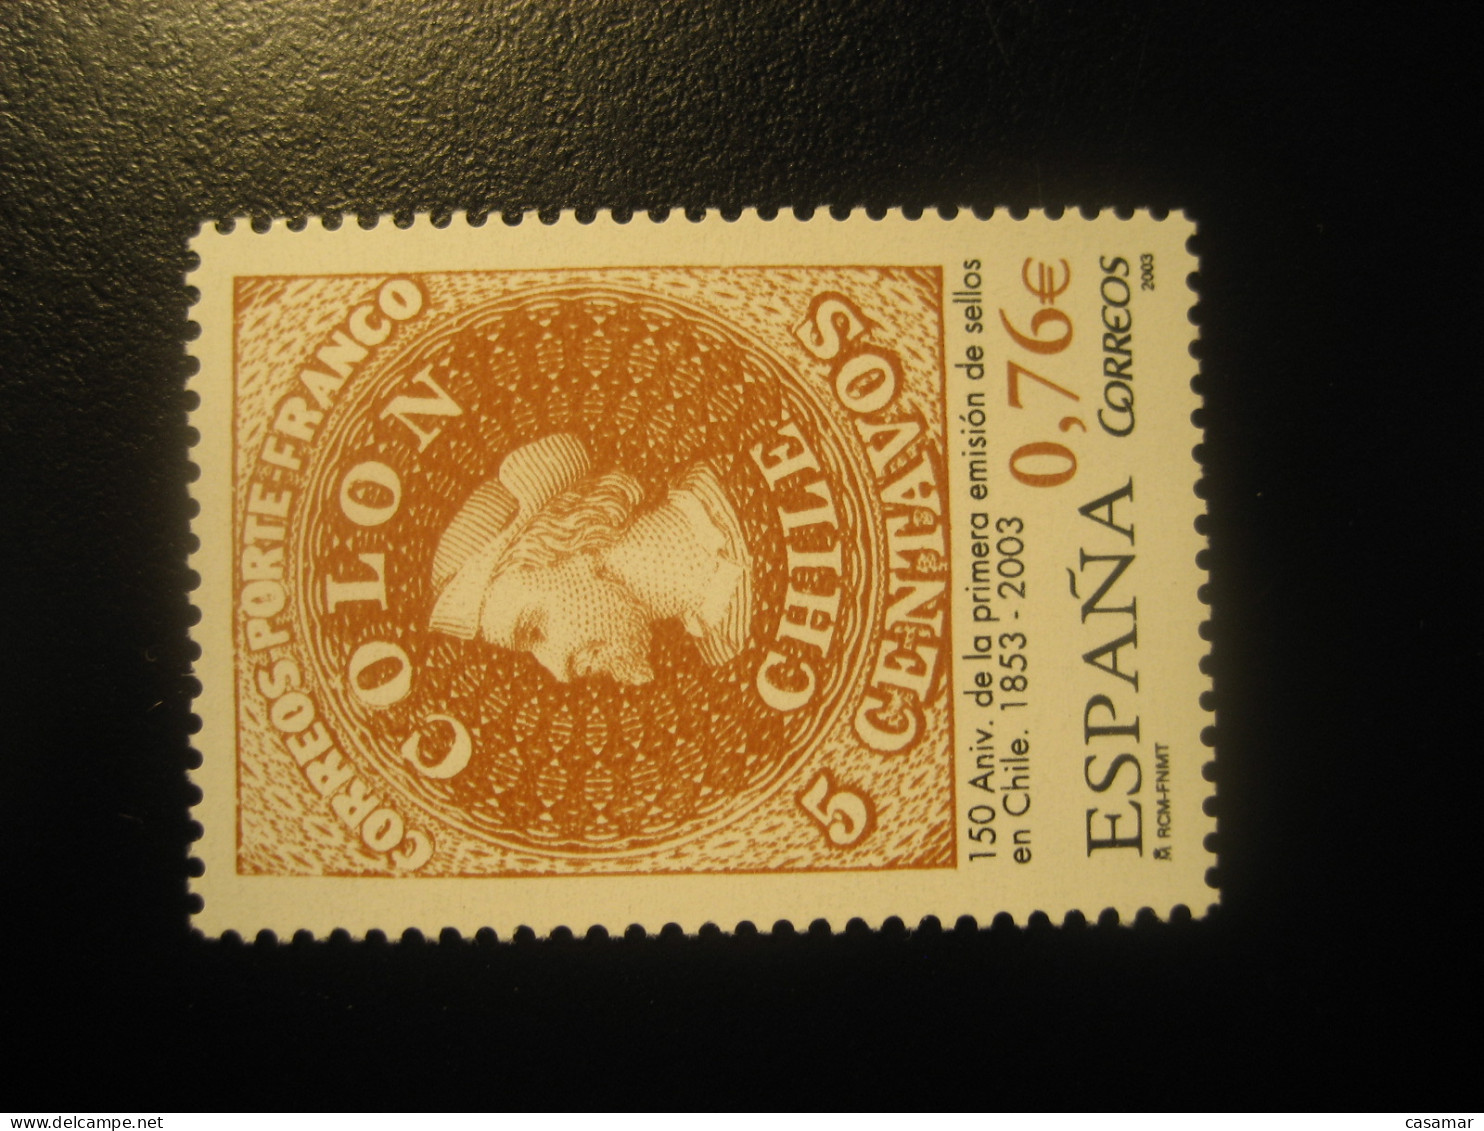 Edifil 3997 ** Unhinged Stamp 2003 CRISTOBAL COLON Chile America Discover Stamp On Stamp SPAIN - Christoph Kolumbus